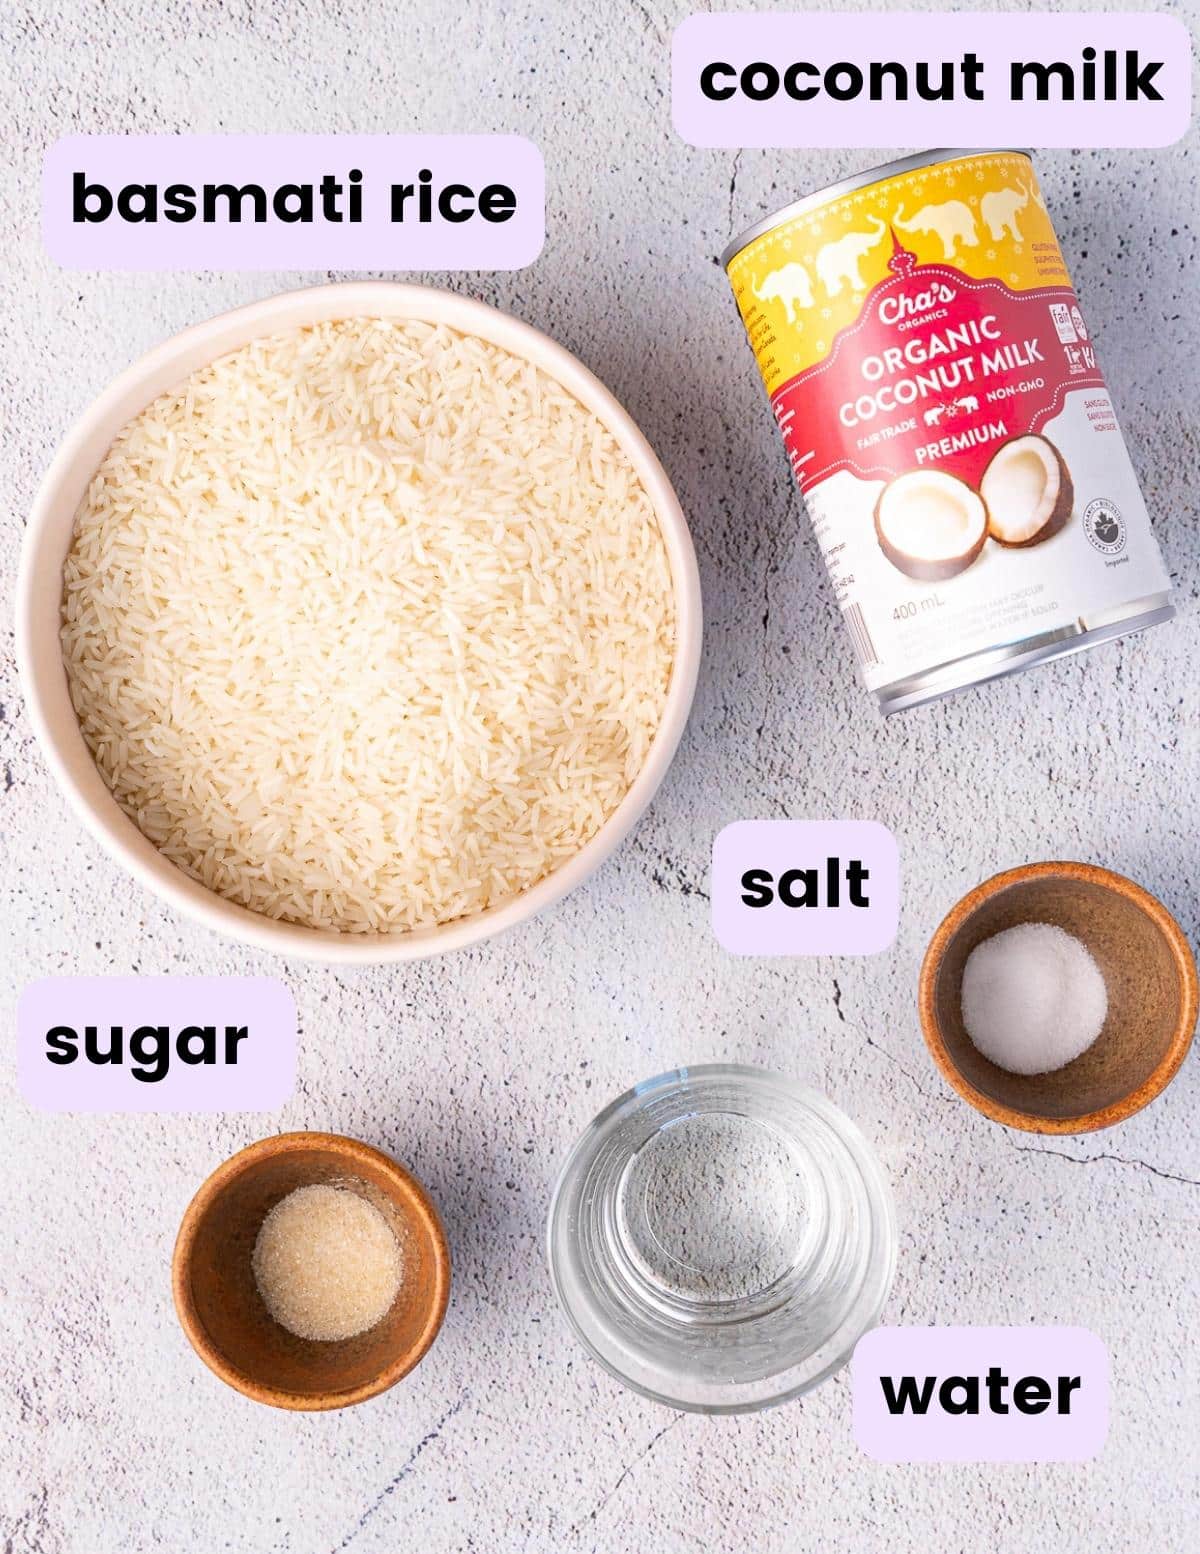 basmati rice, coconut milk, sugar, salt, water